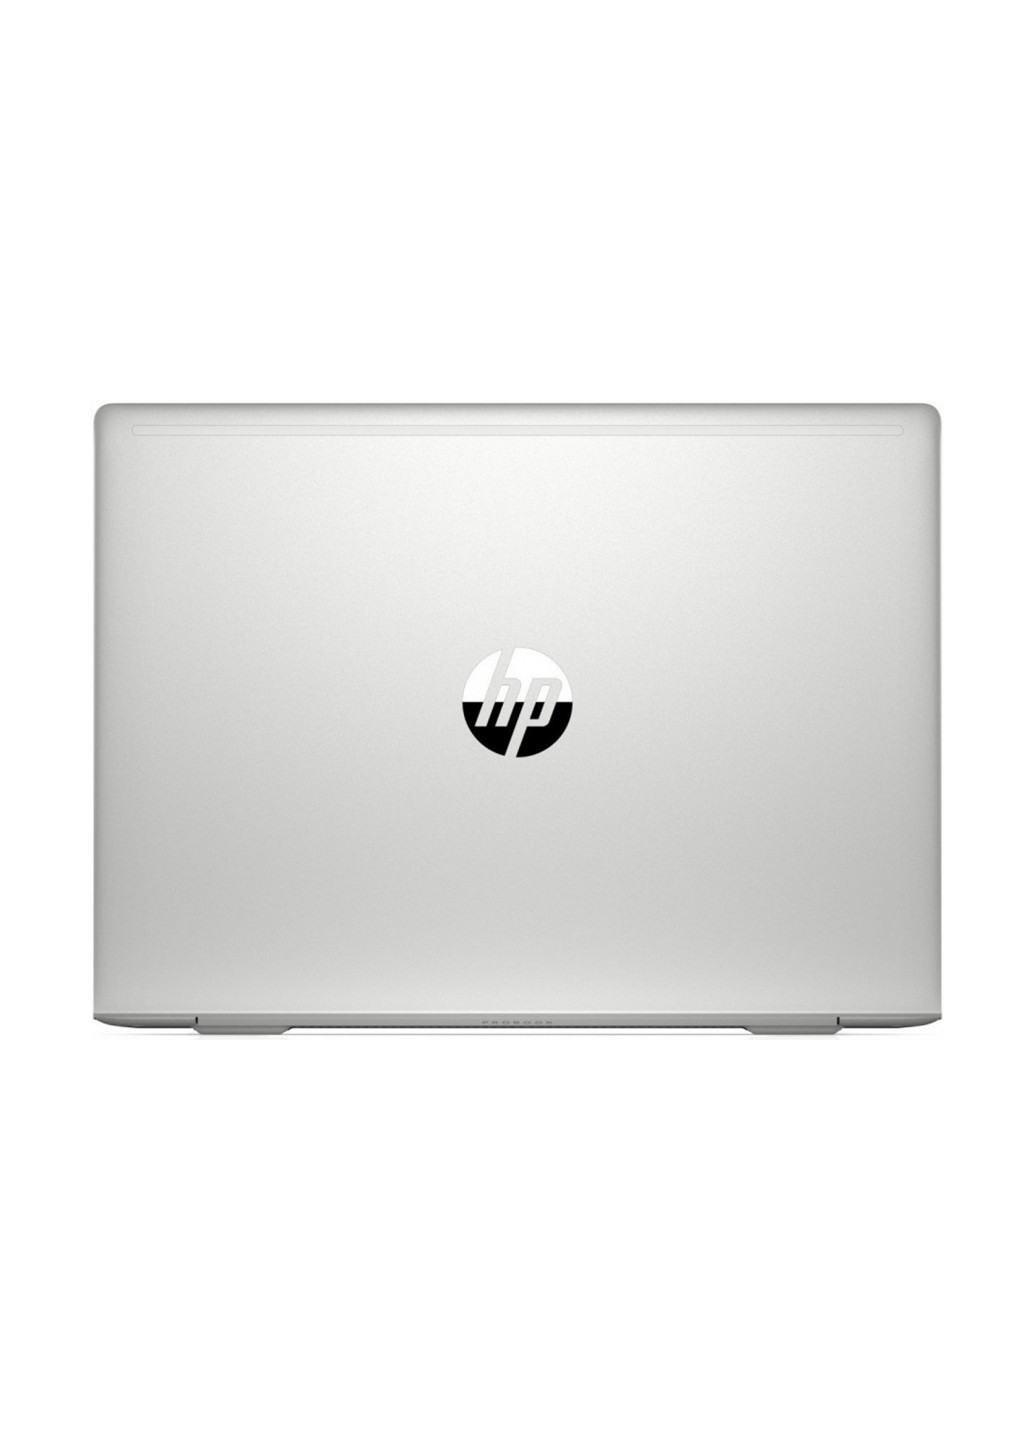 Ноутбук HP probook 440 g6 (4rz50av_v41) silver (173921891)